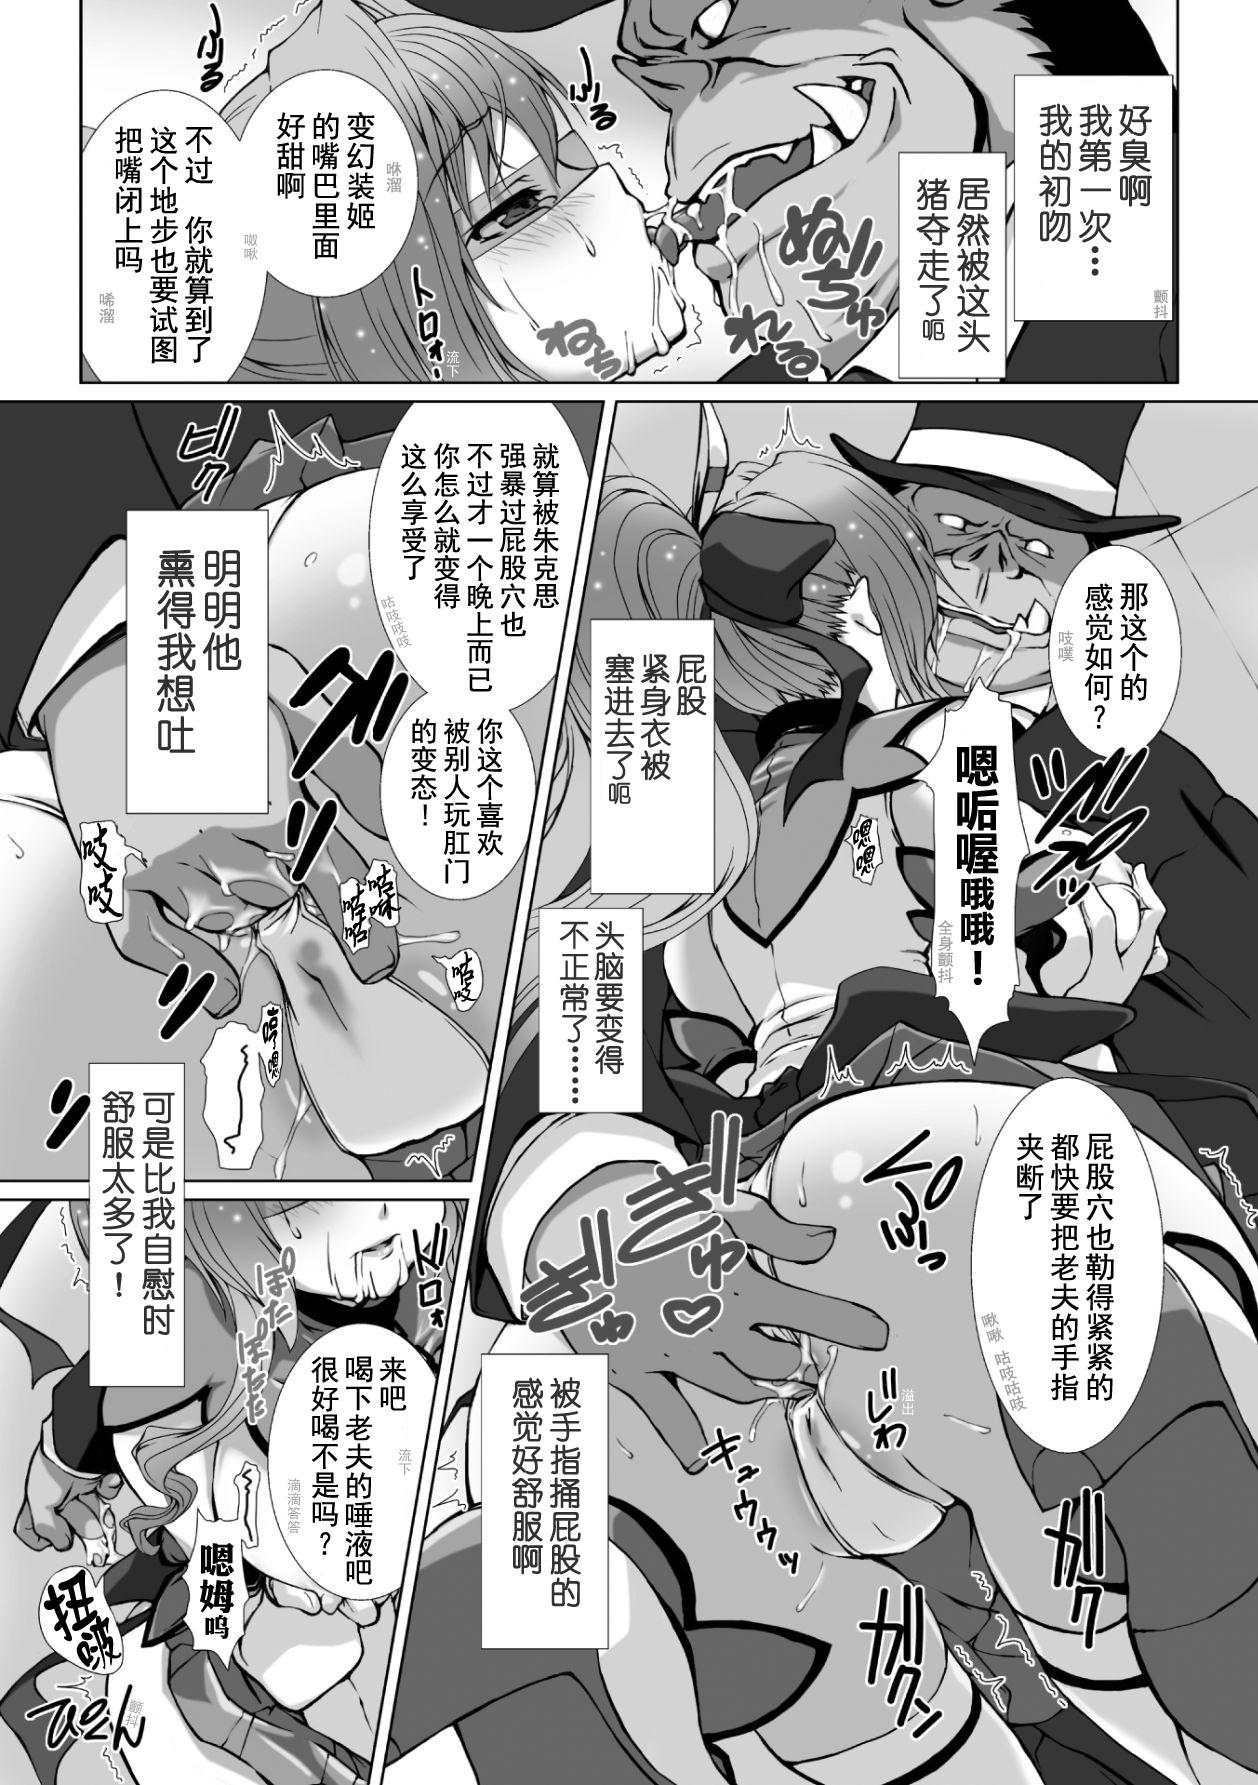 Hengen Souki Shine Mirage THE COMIC 1 | 变幻装姬闪耀幻影 官方漫画第一卷 59